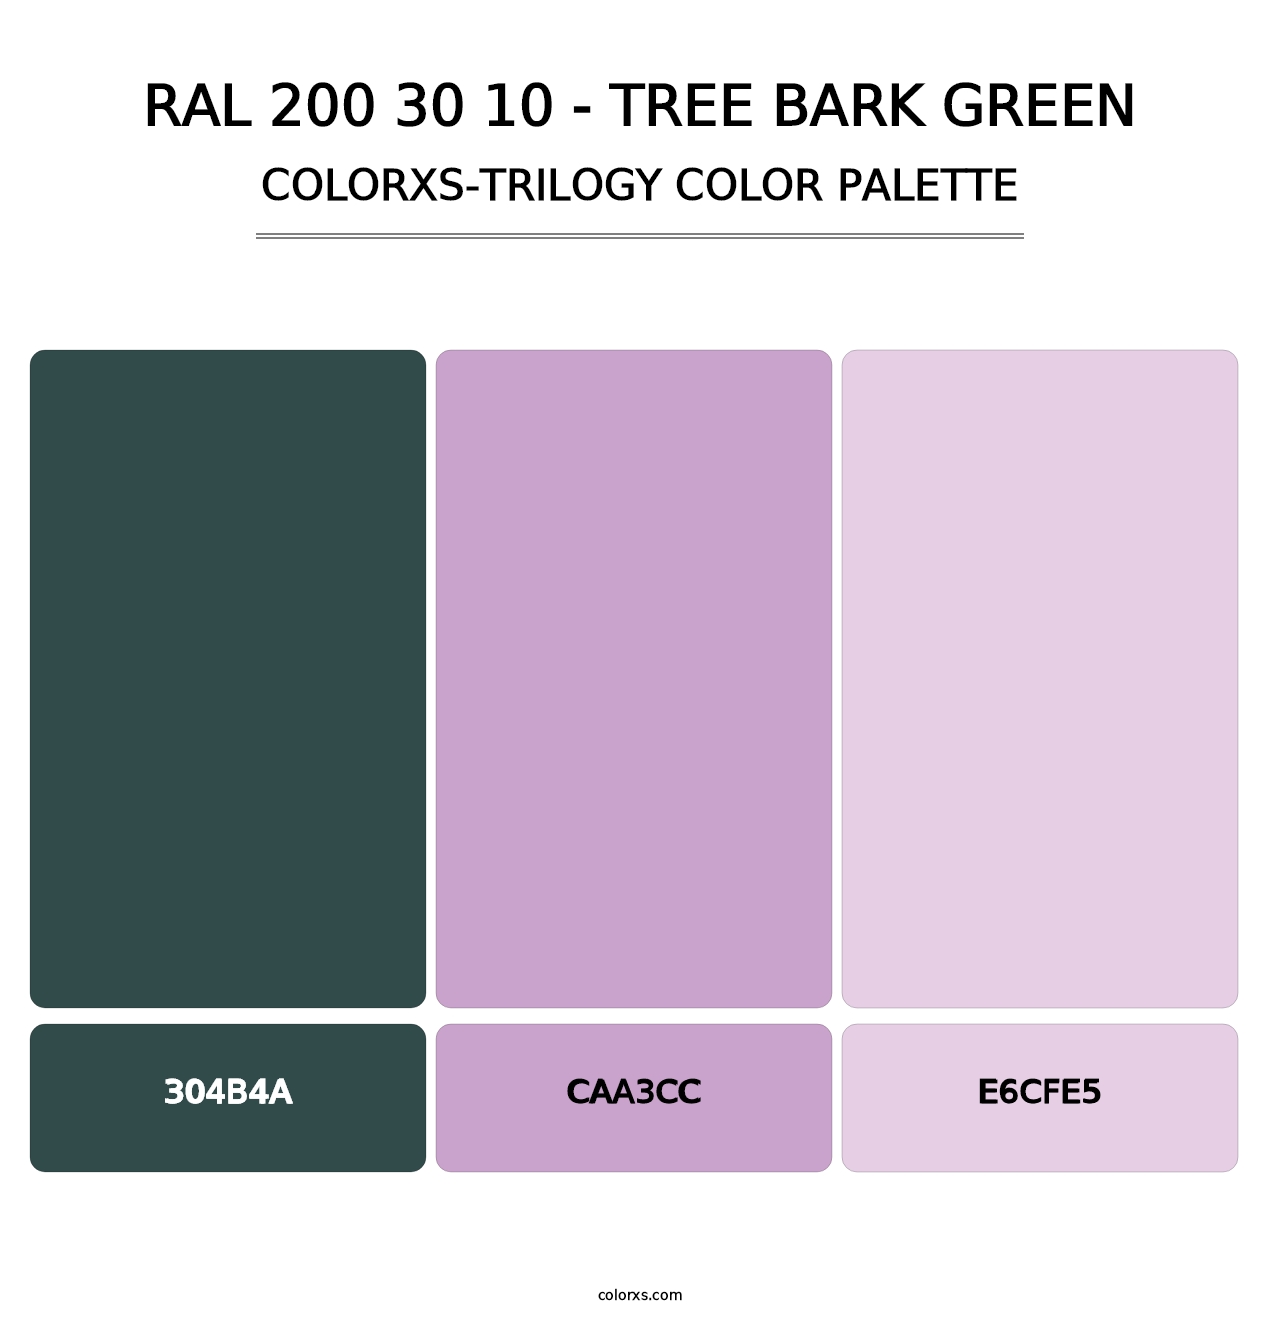 RAL 200 30 10 - Tree Bark Green - Colorxs Trilogy Palette